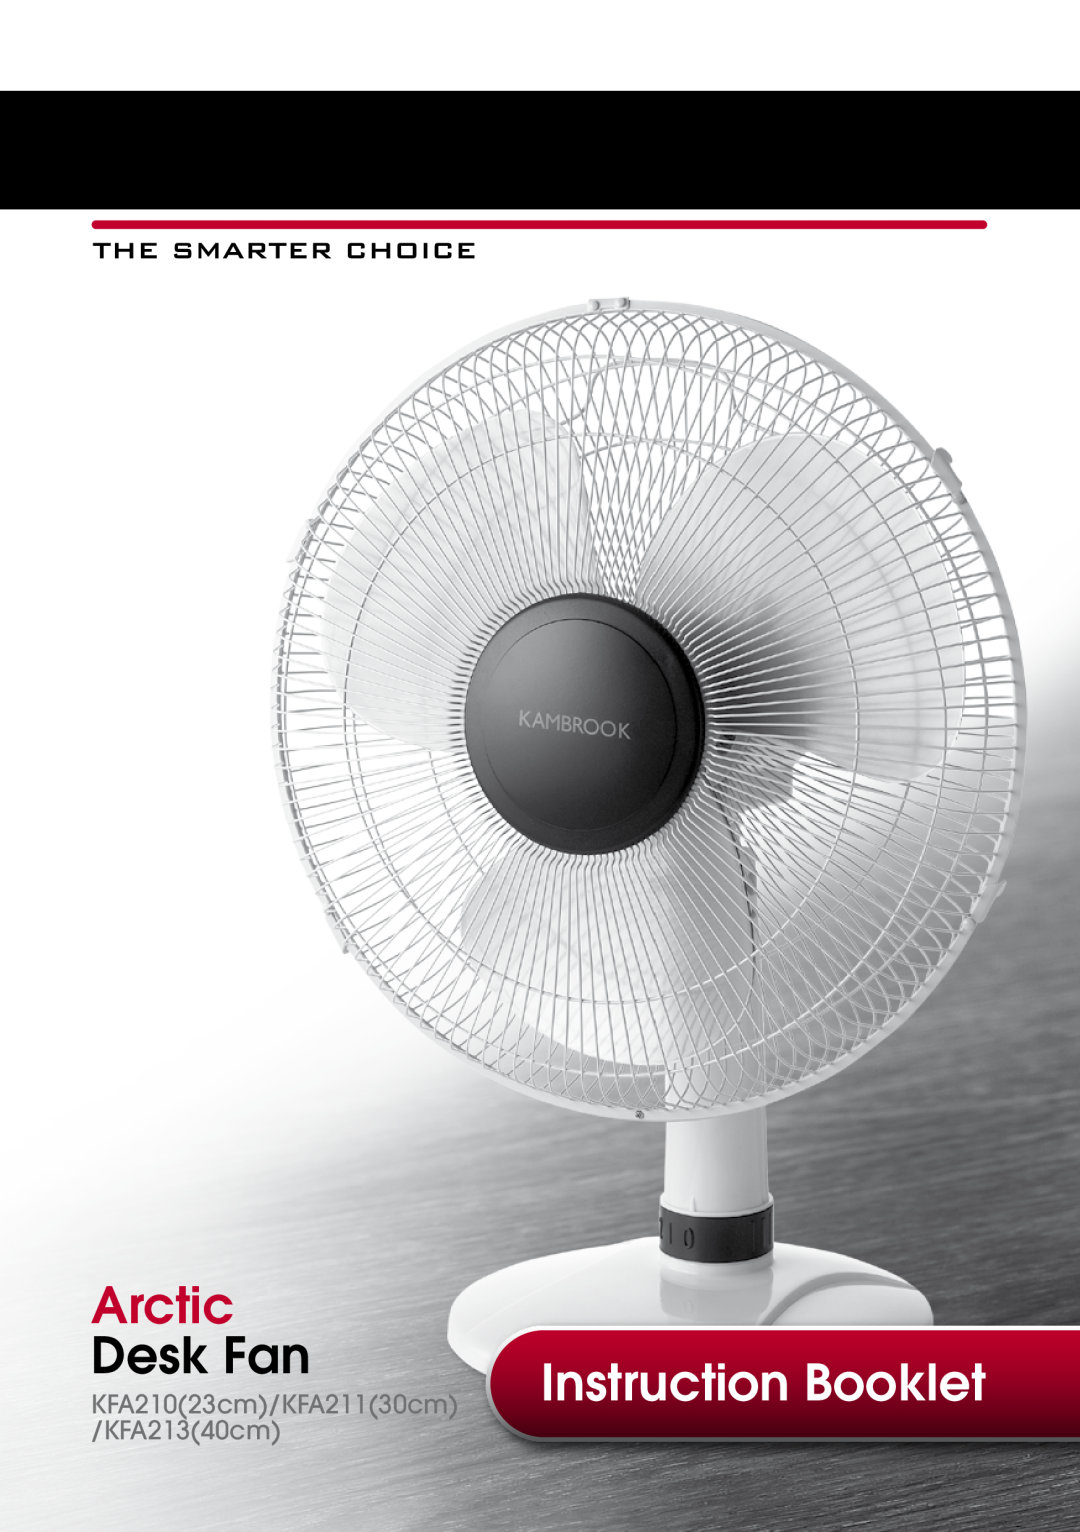 Kambrook manual Arctic, Desk Fan, Instruction Booklet, KFA21023cm/KFA21130cm, KFA21340cm 